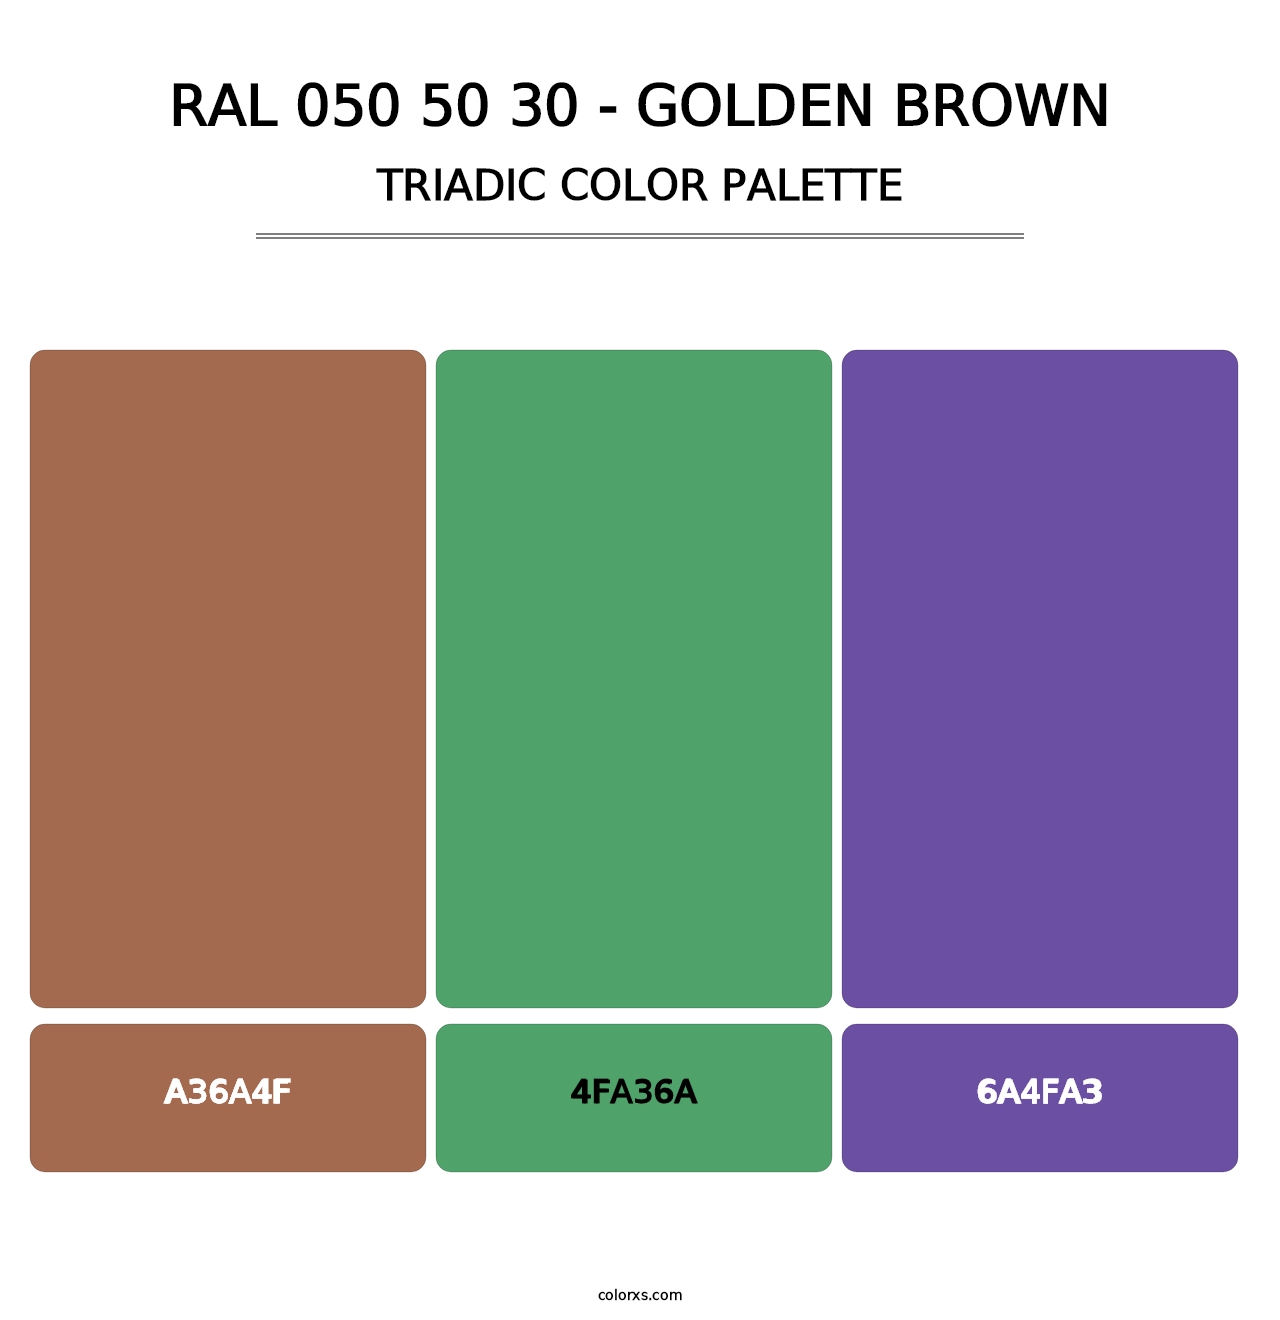 RAL 050 50 30 - Golden Brown - Triadic Color Palette